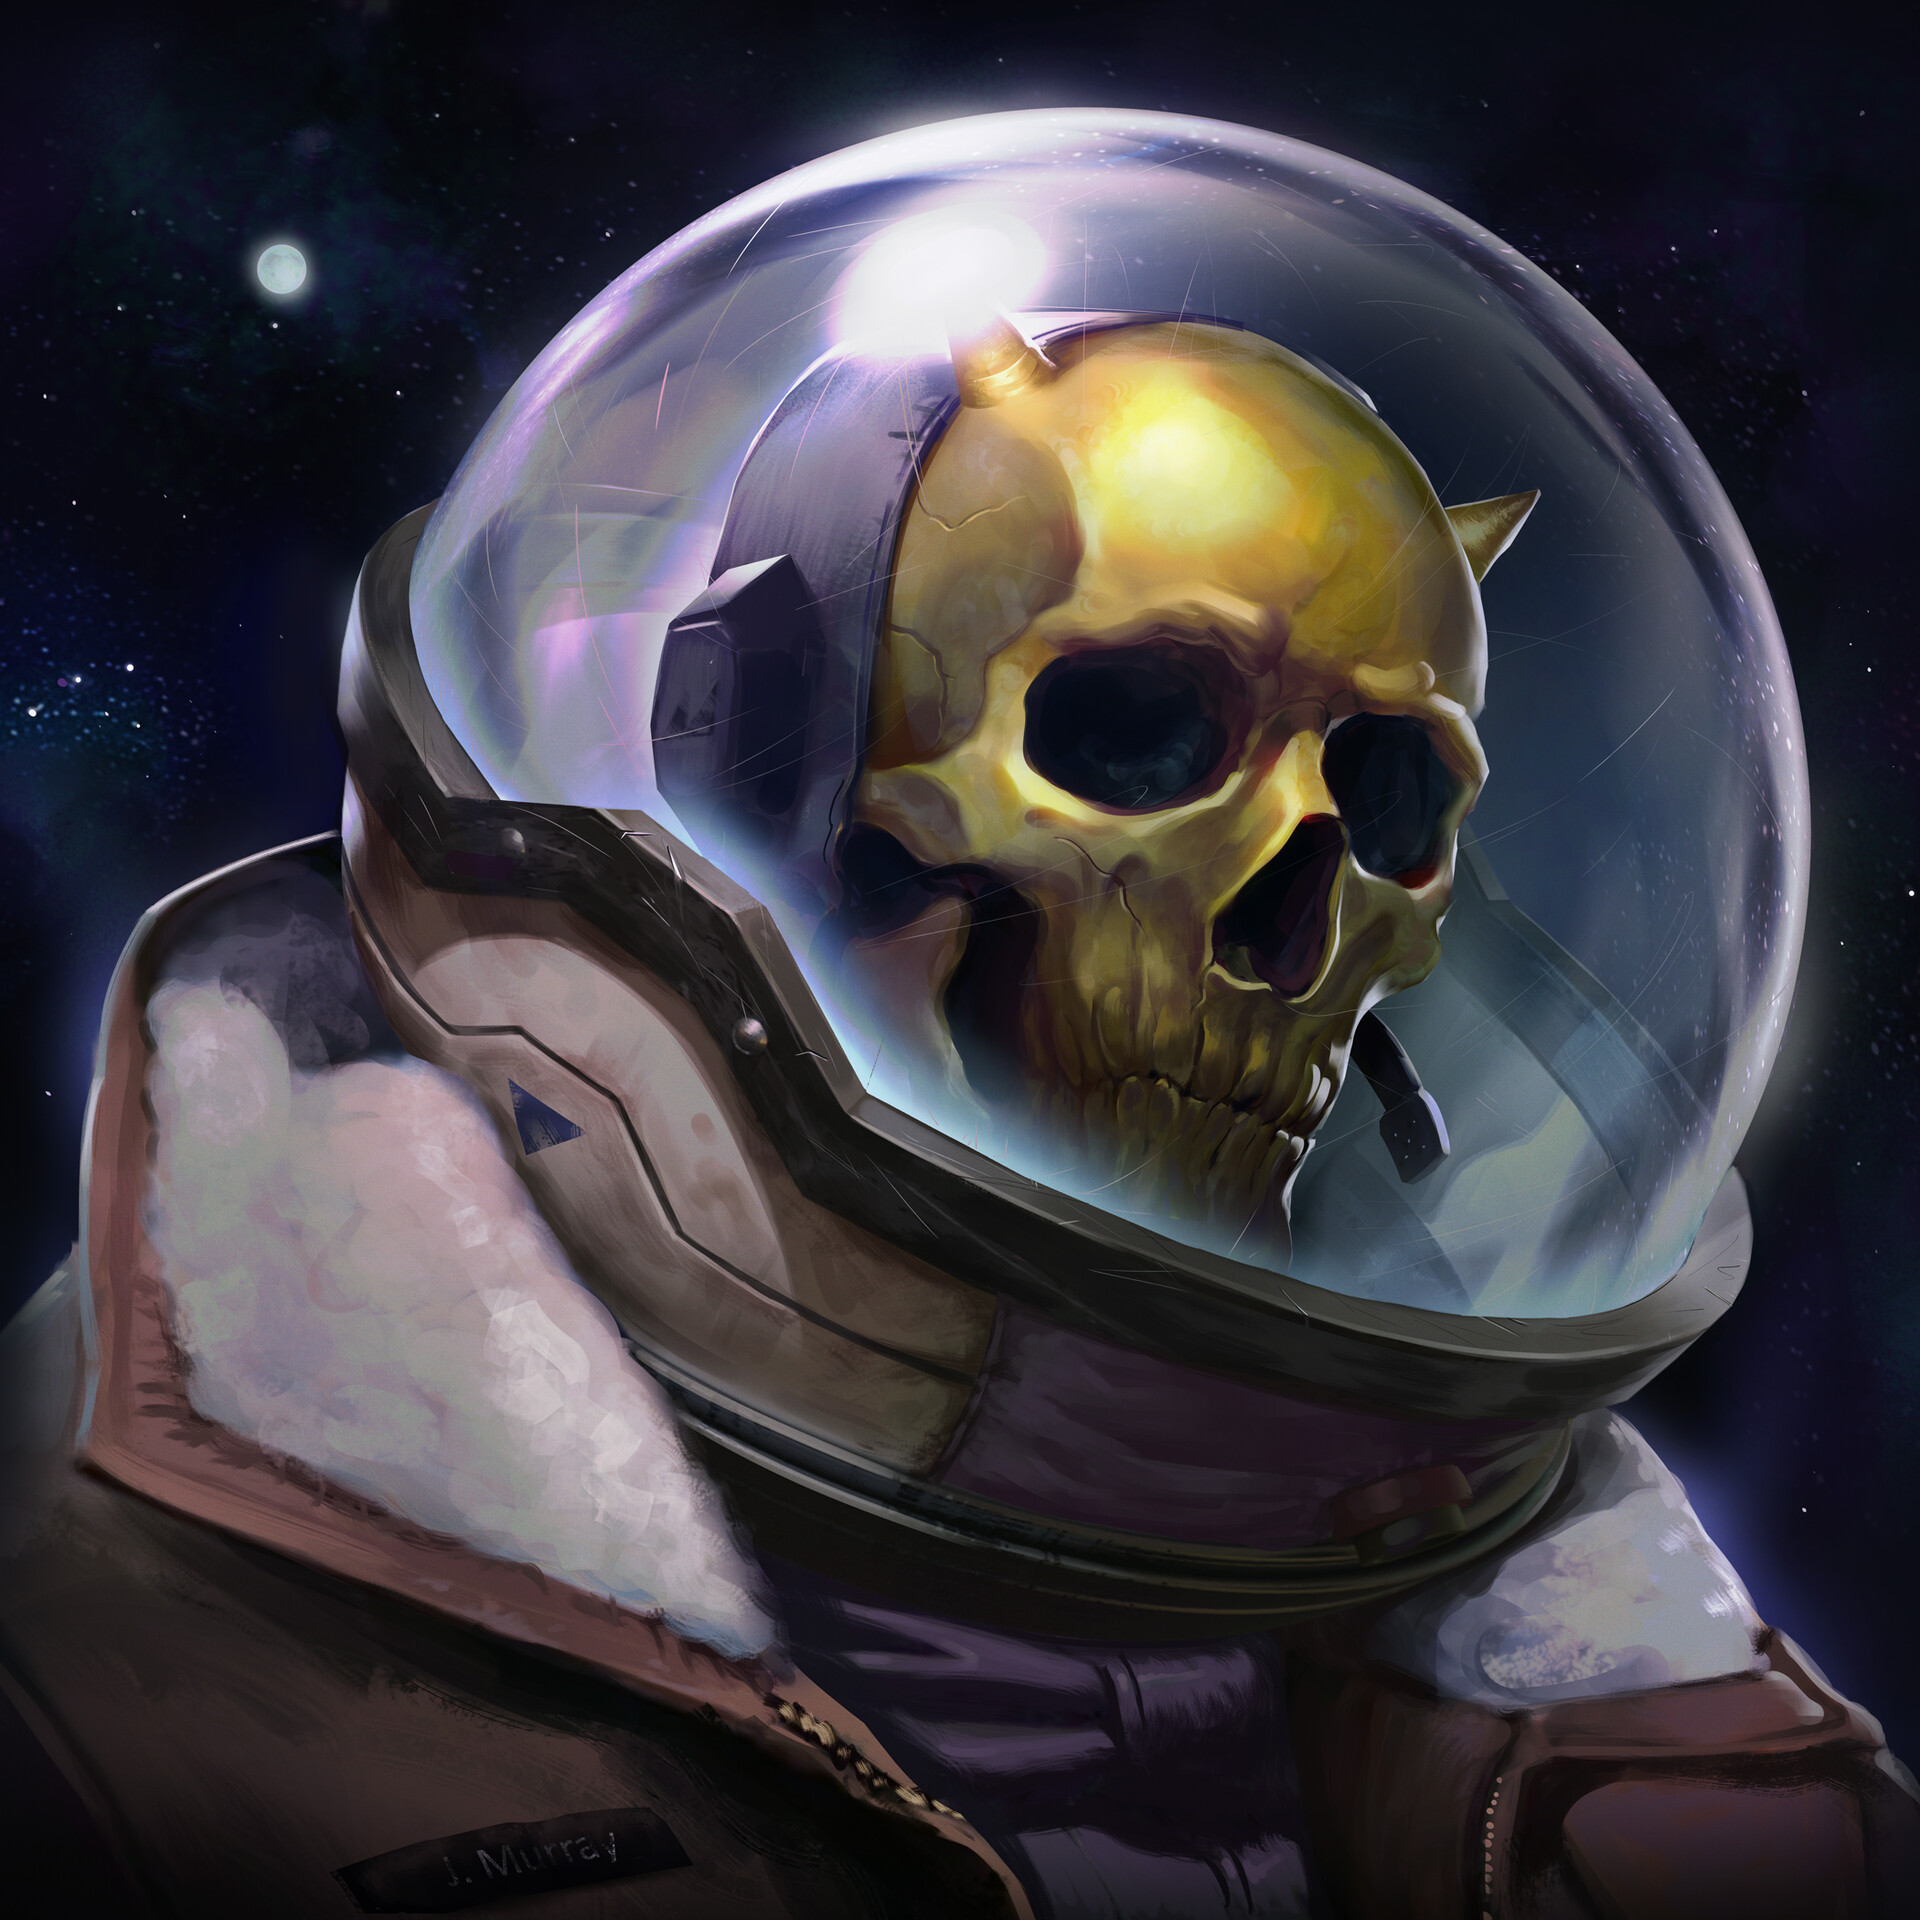 Digital Art Artwork Illustration Skull Astronaut Spacesuit Gold Science Fiction Character Design Por 1920x1920